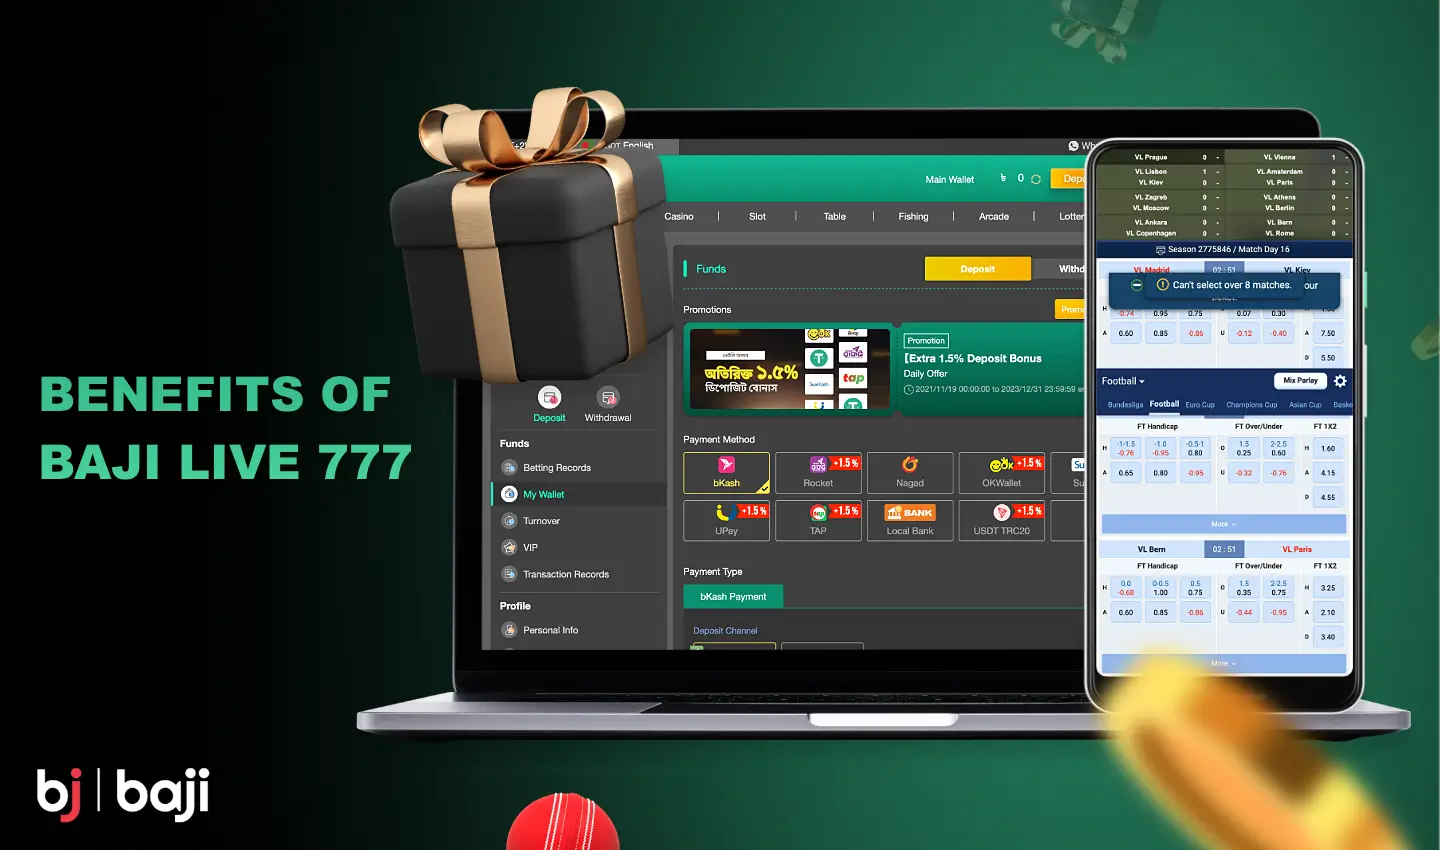 Baji Live 777 has many benefits that make Bangladeshi users choose this platform to play casino or bet on sports